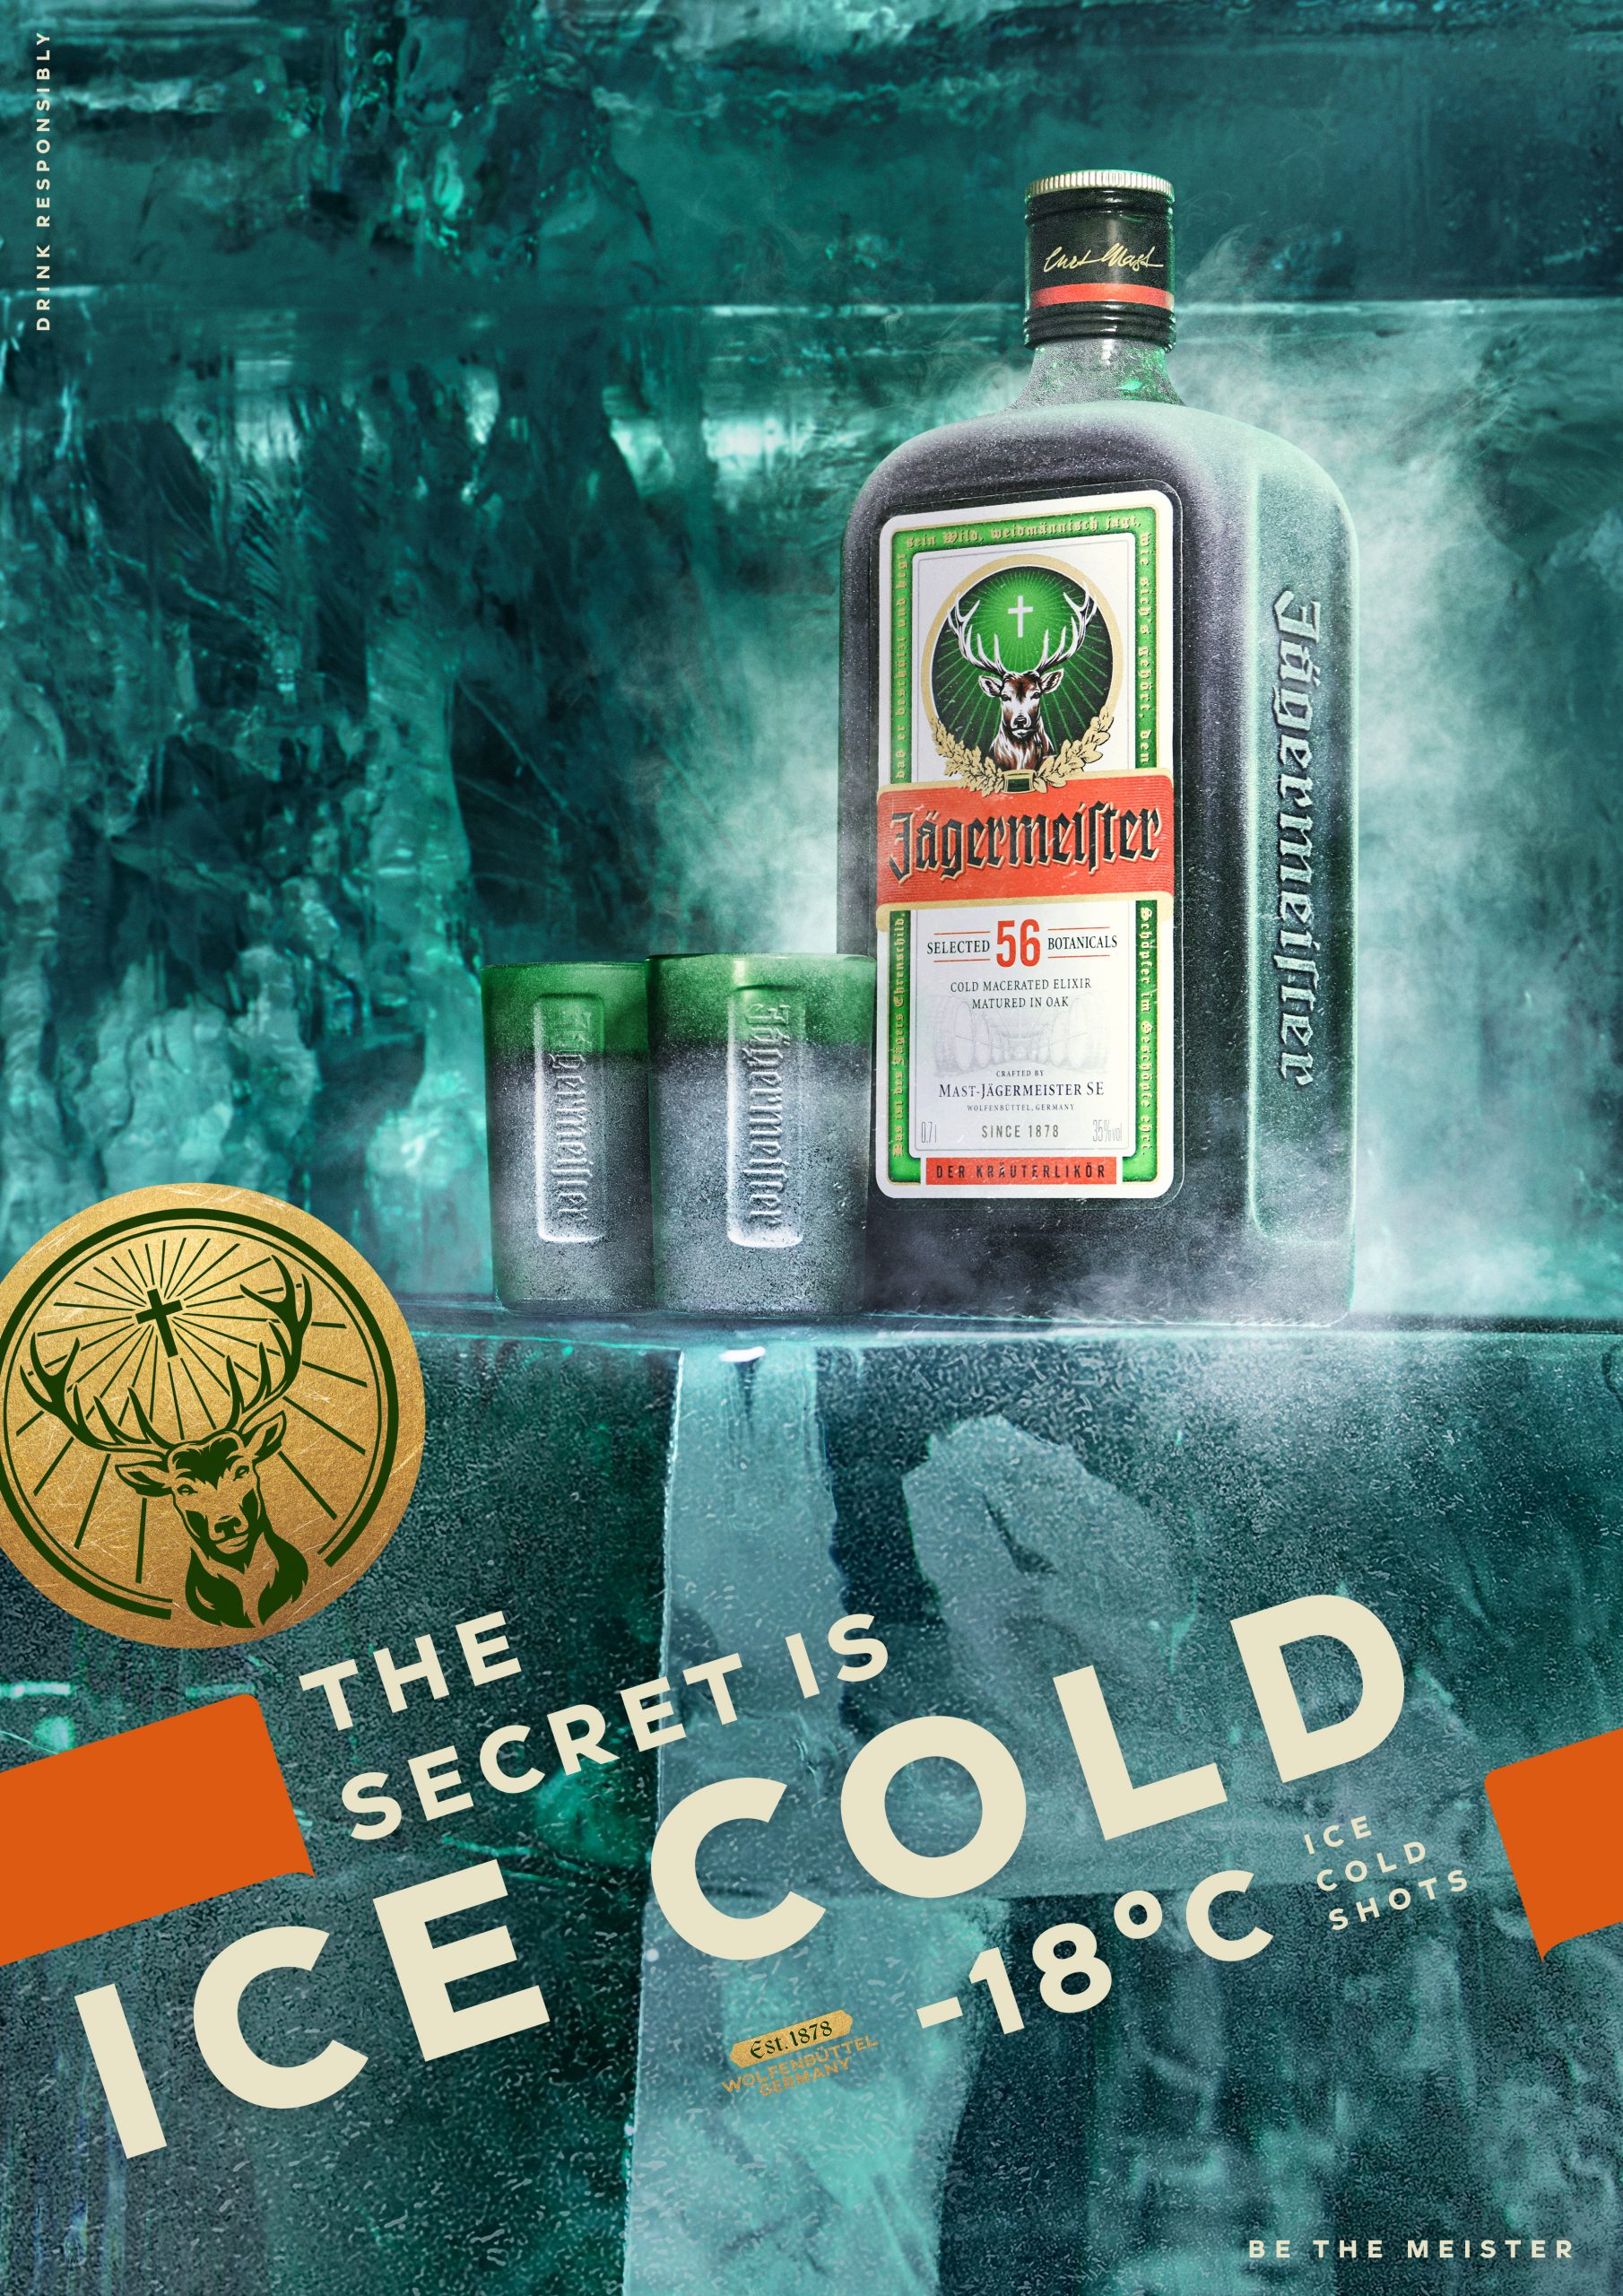 The Secret Is Ice Cold: Mast-Jägermeister UK launches multi-million-pound campaign